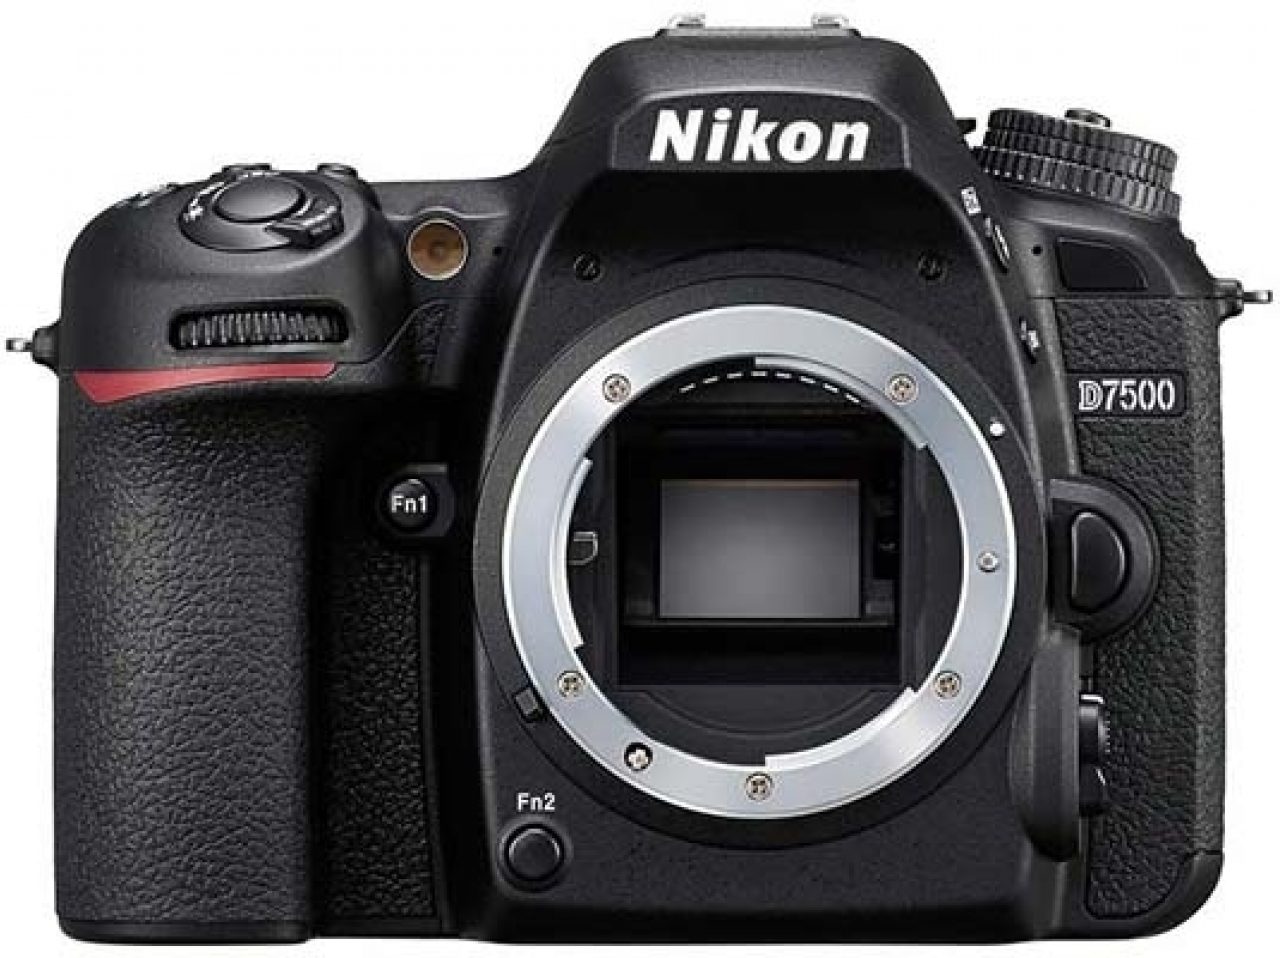 Nikon D7500 DSLR Camera Specifications